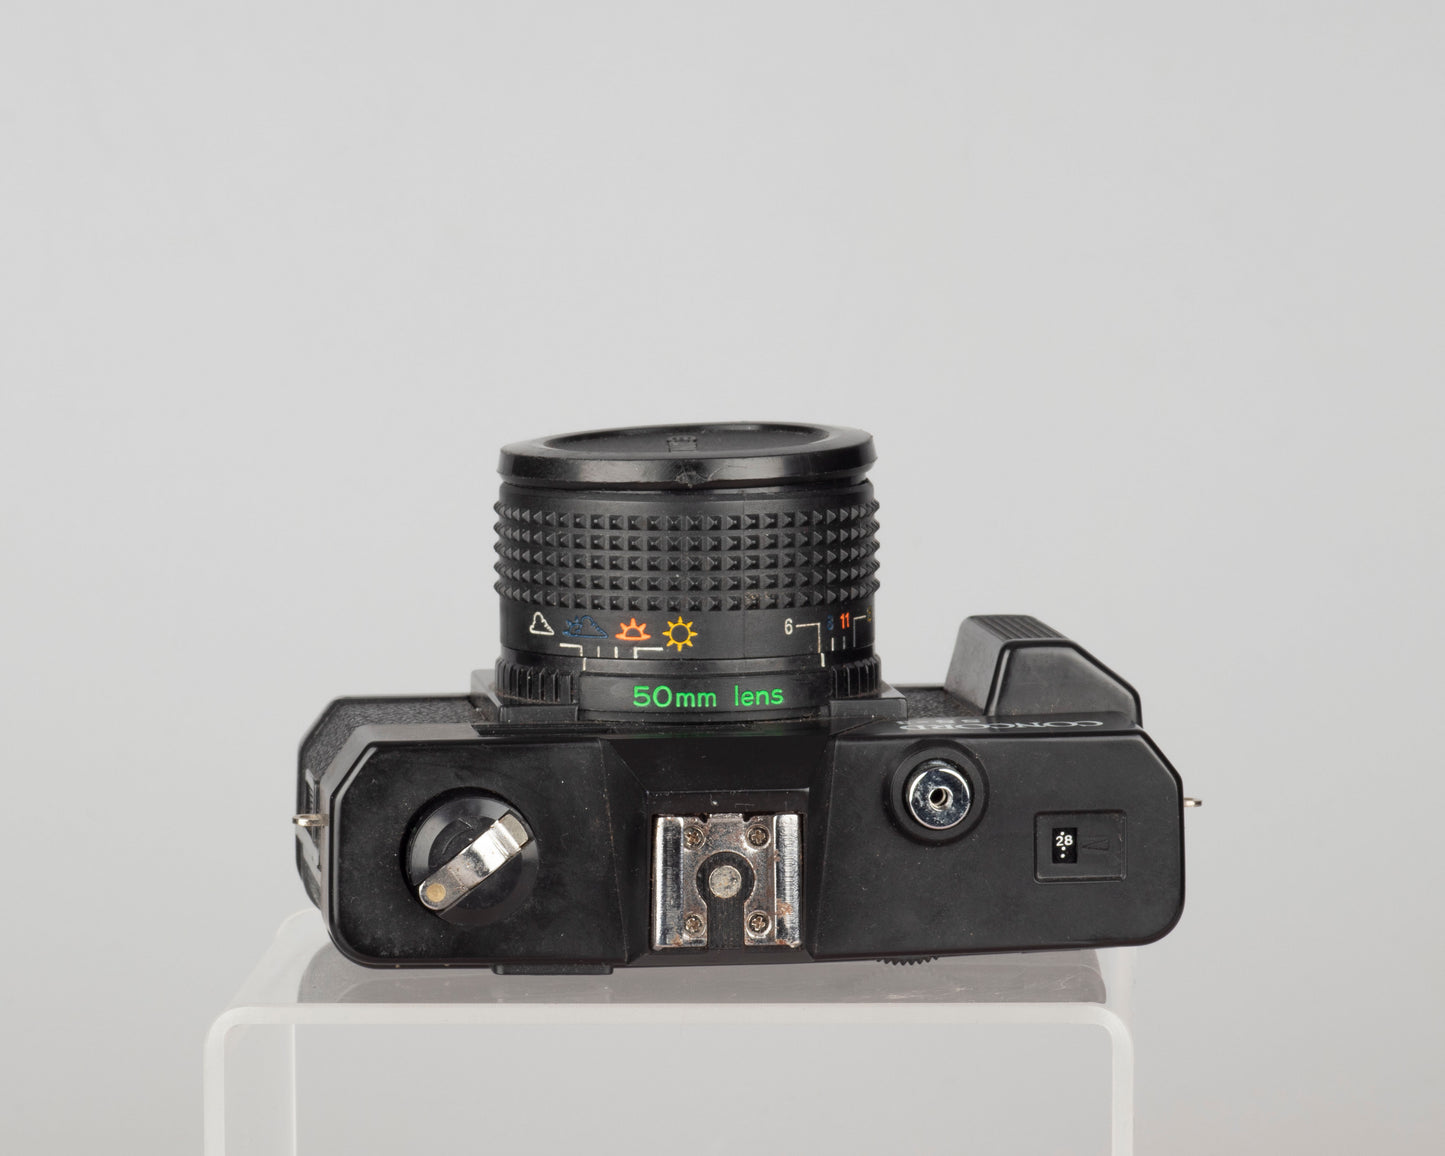 Concord SS-3 35mm film camera